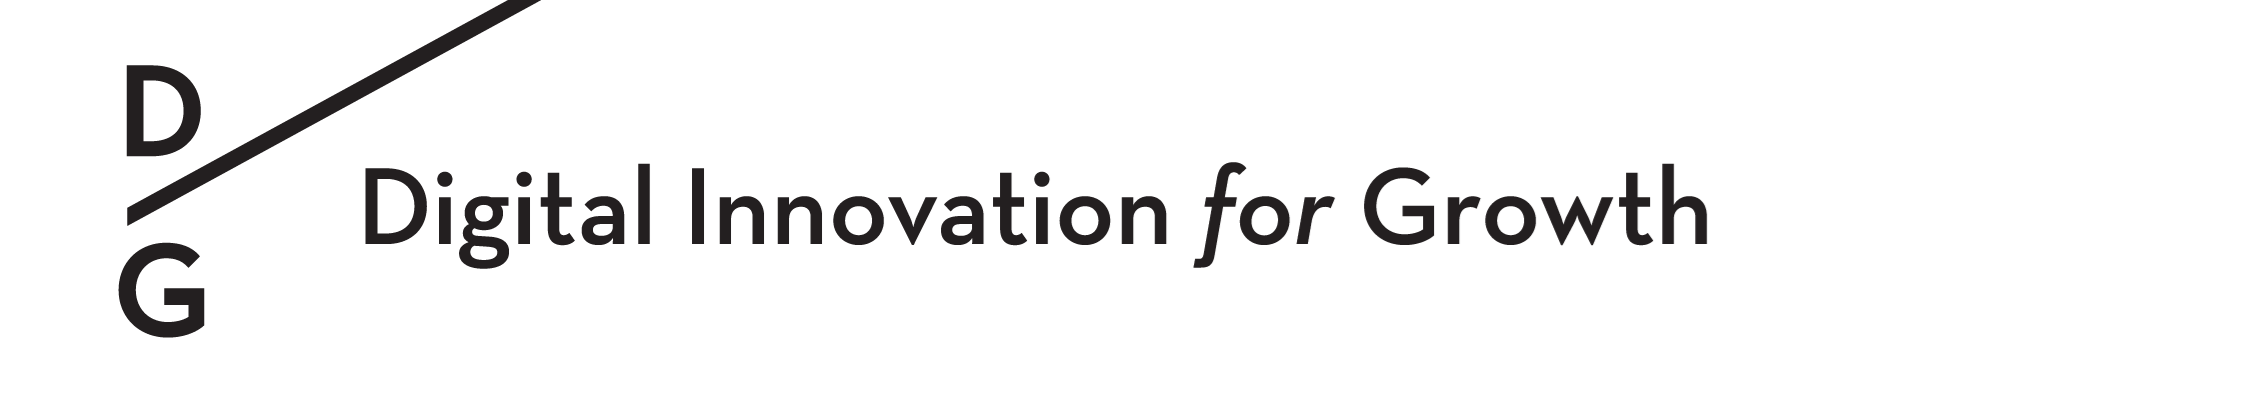 Digital Innovation for Growth logo